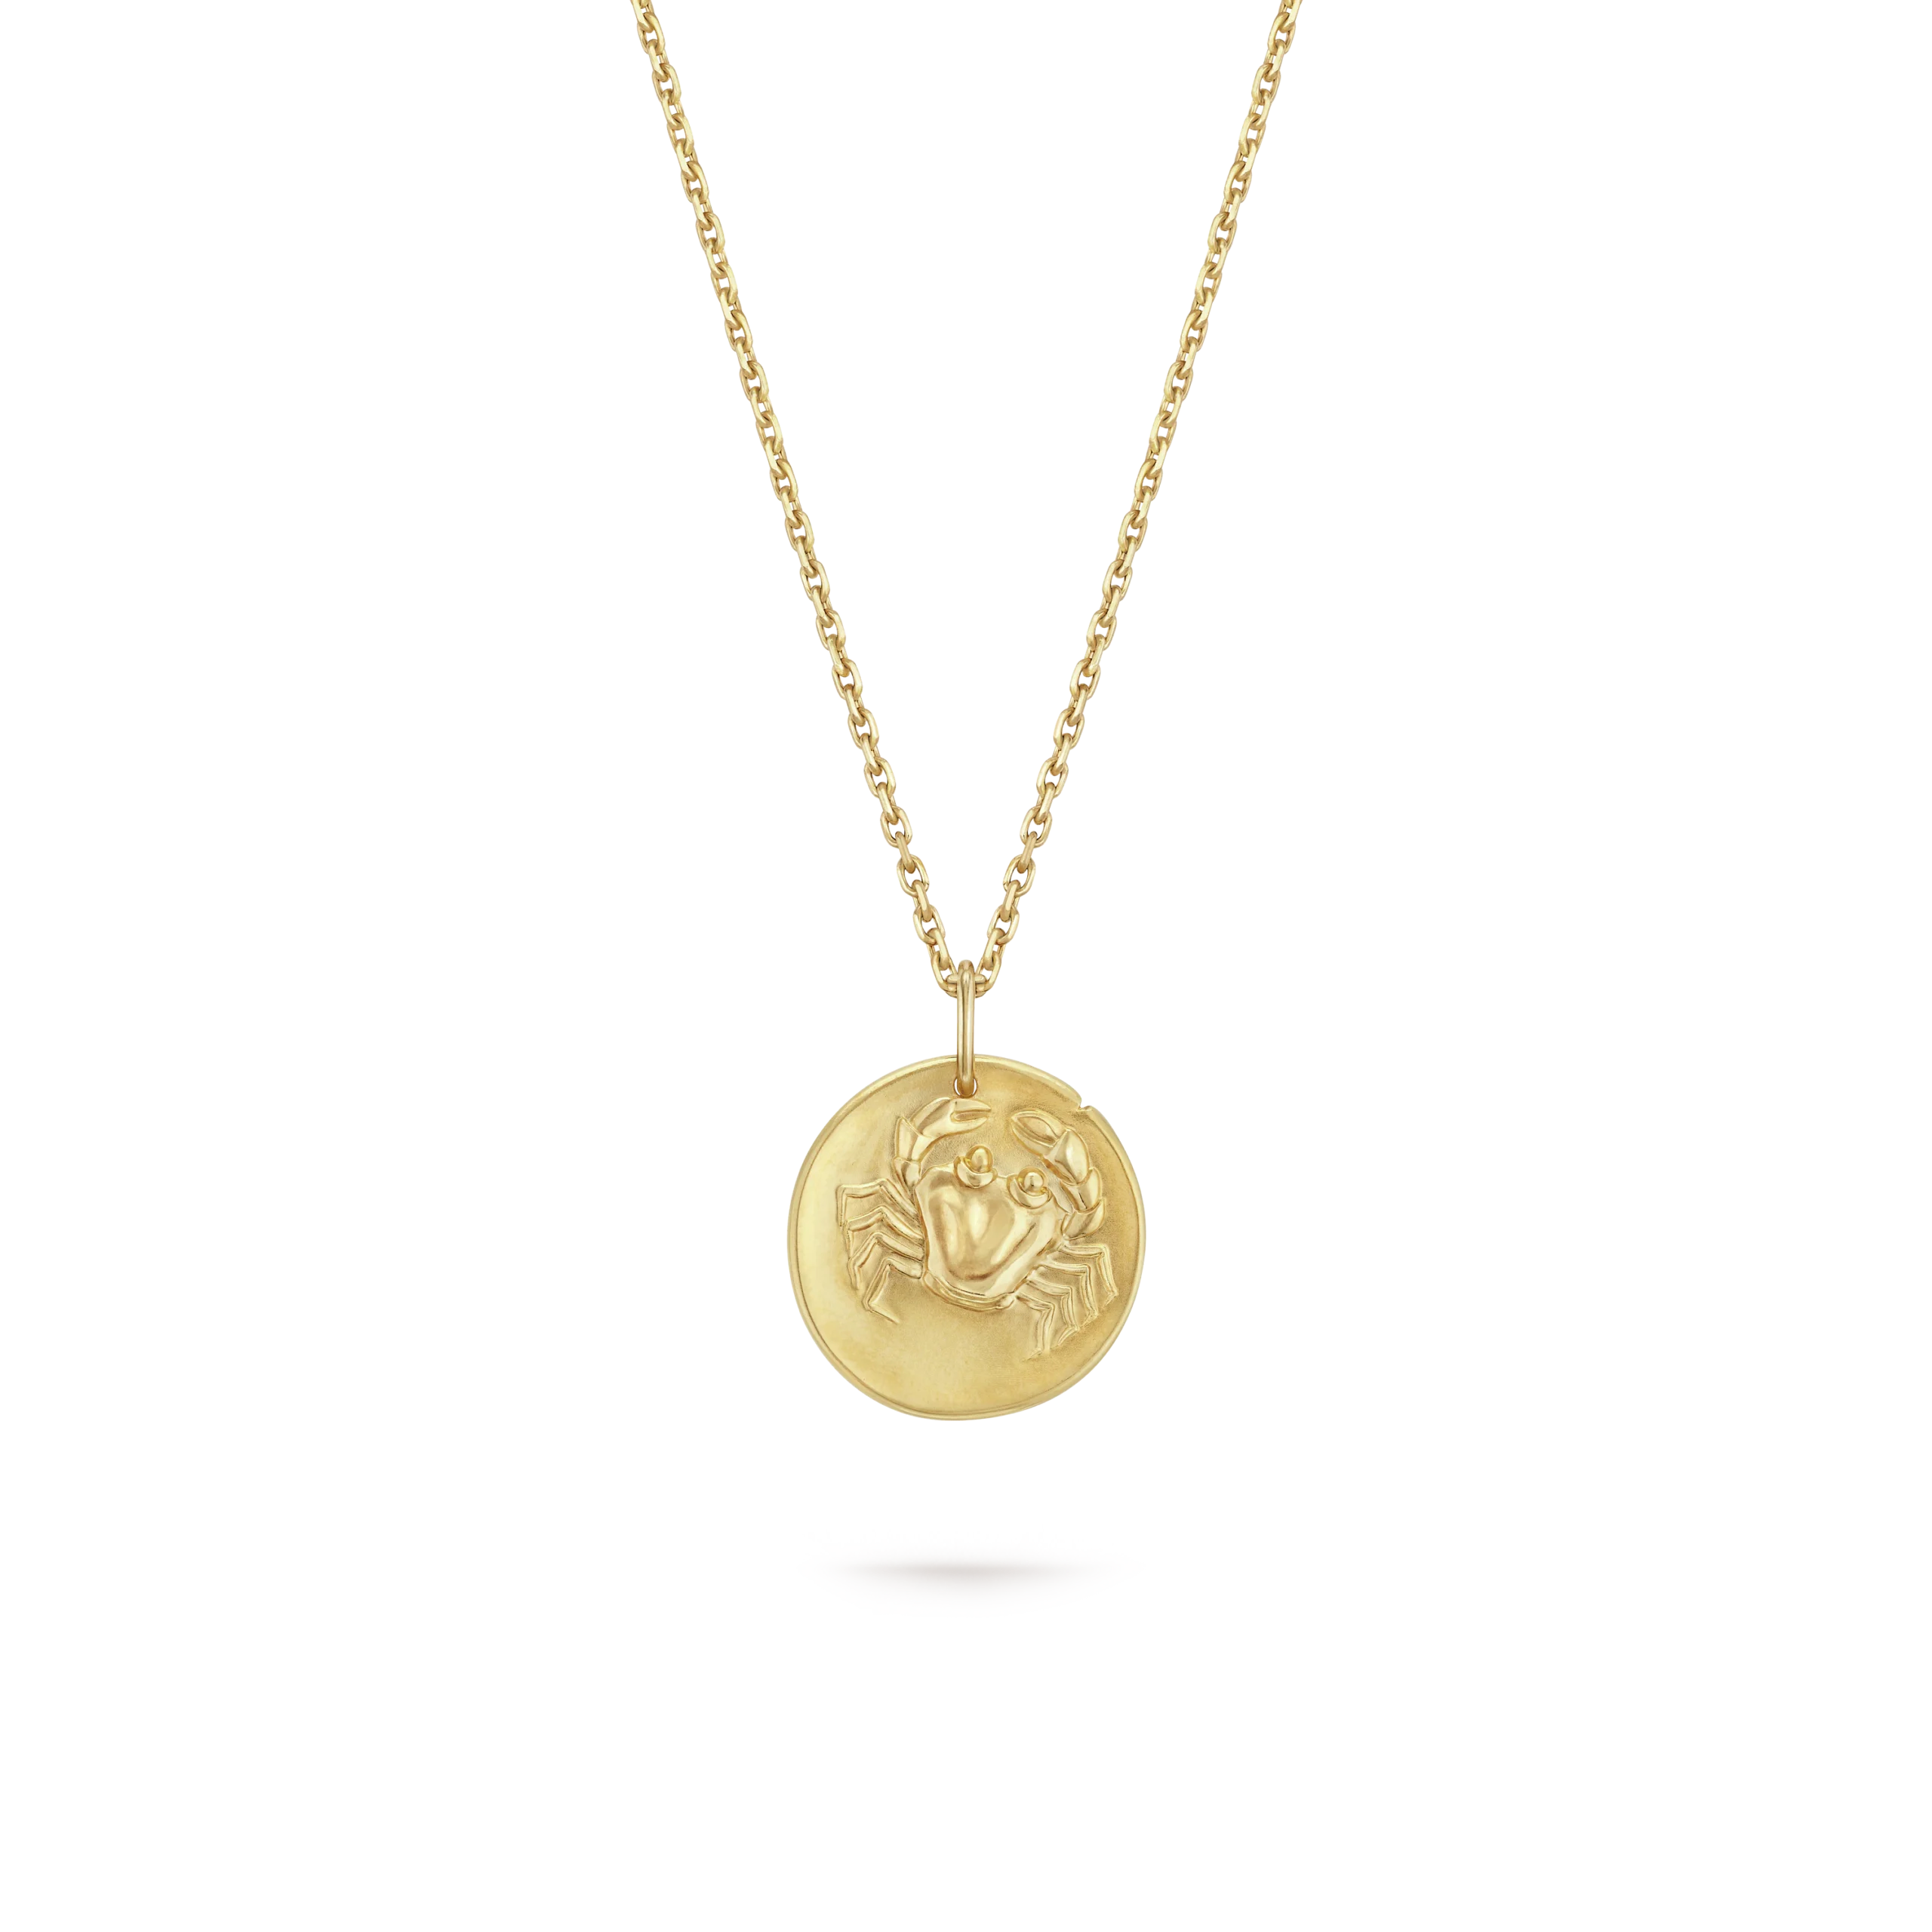 Zodiaque-medal-Cancri-Cancer-1-scaled-1.webp